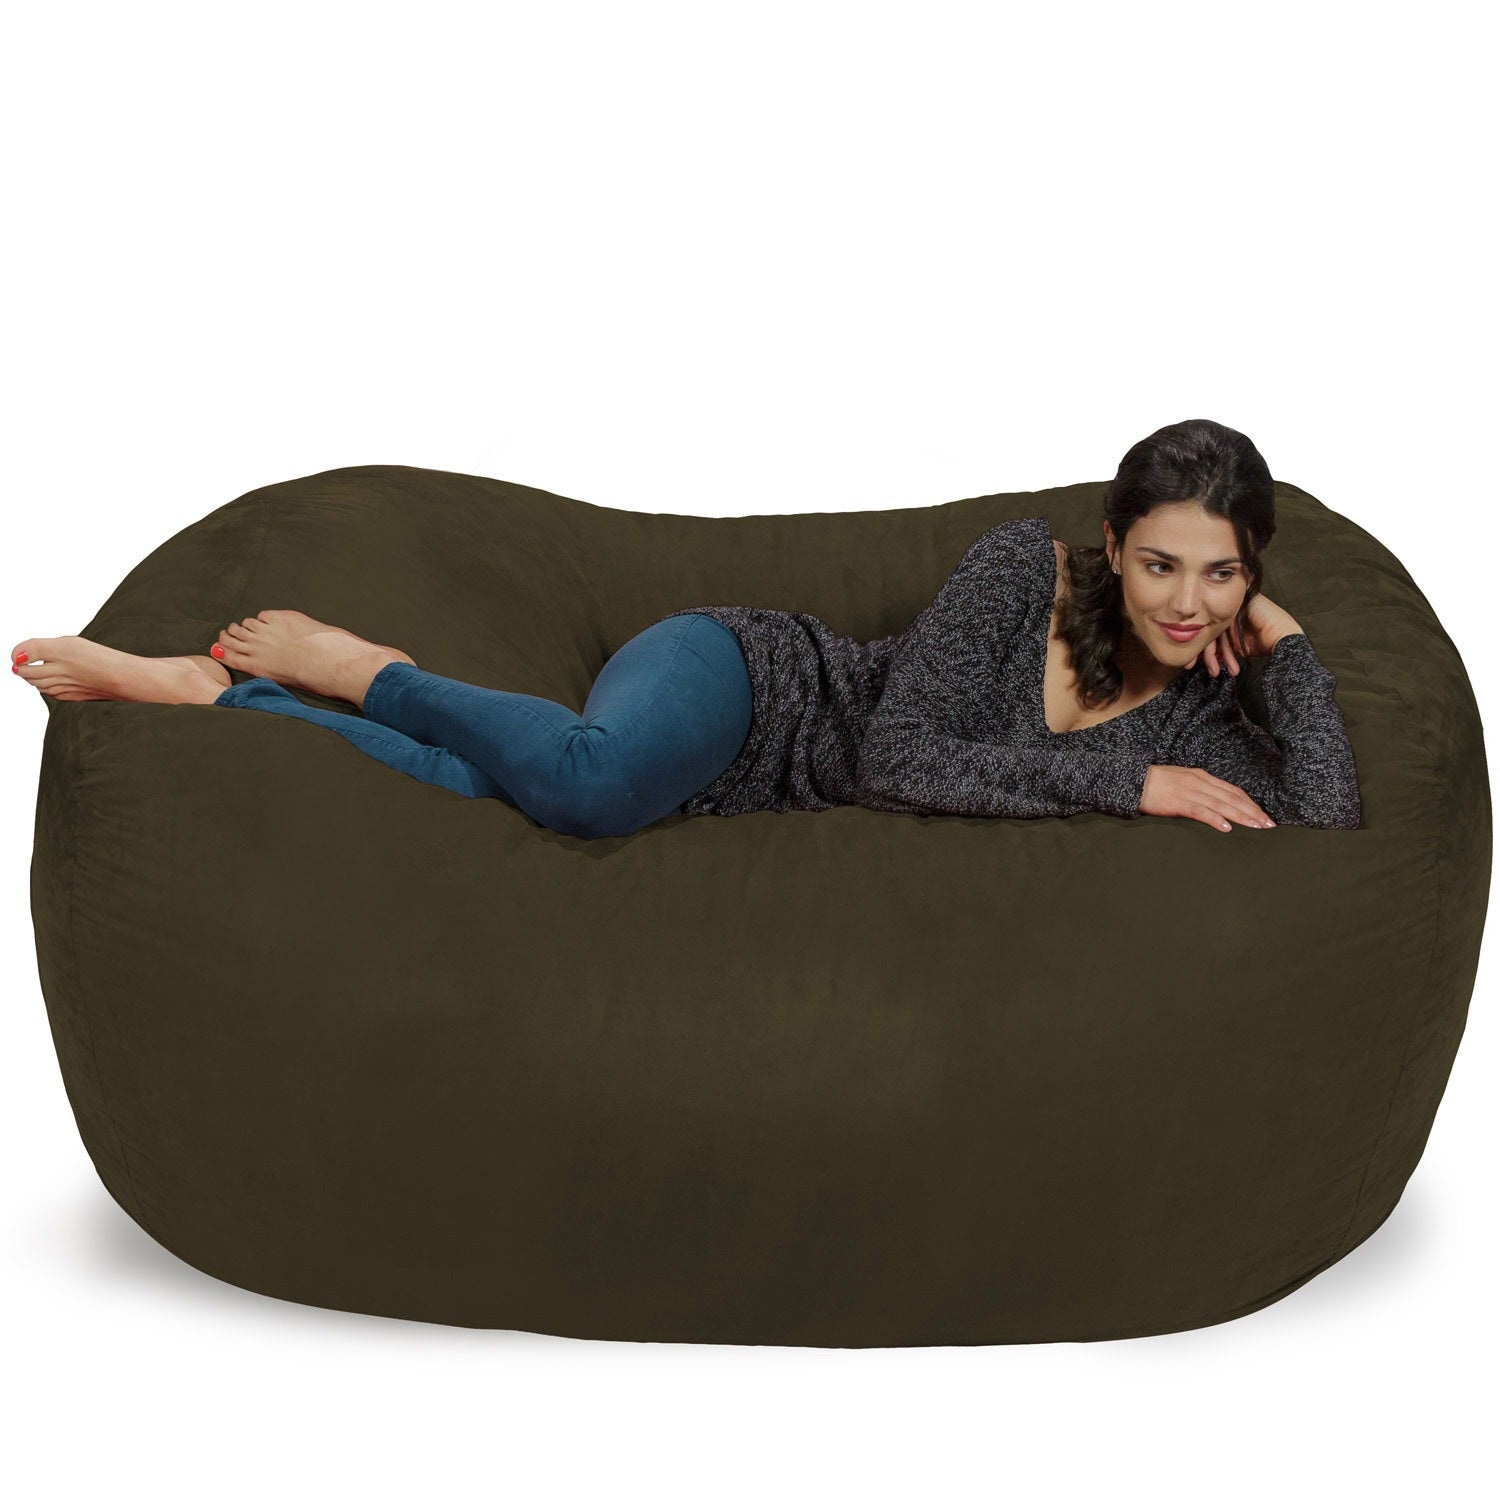 Chill Sack Bean Bag Chair: Giant 8' Memory Foam Furniture Bean Bag - Big  Sofa with Soft Micro Fiber Cover - Charcoal